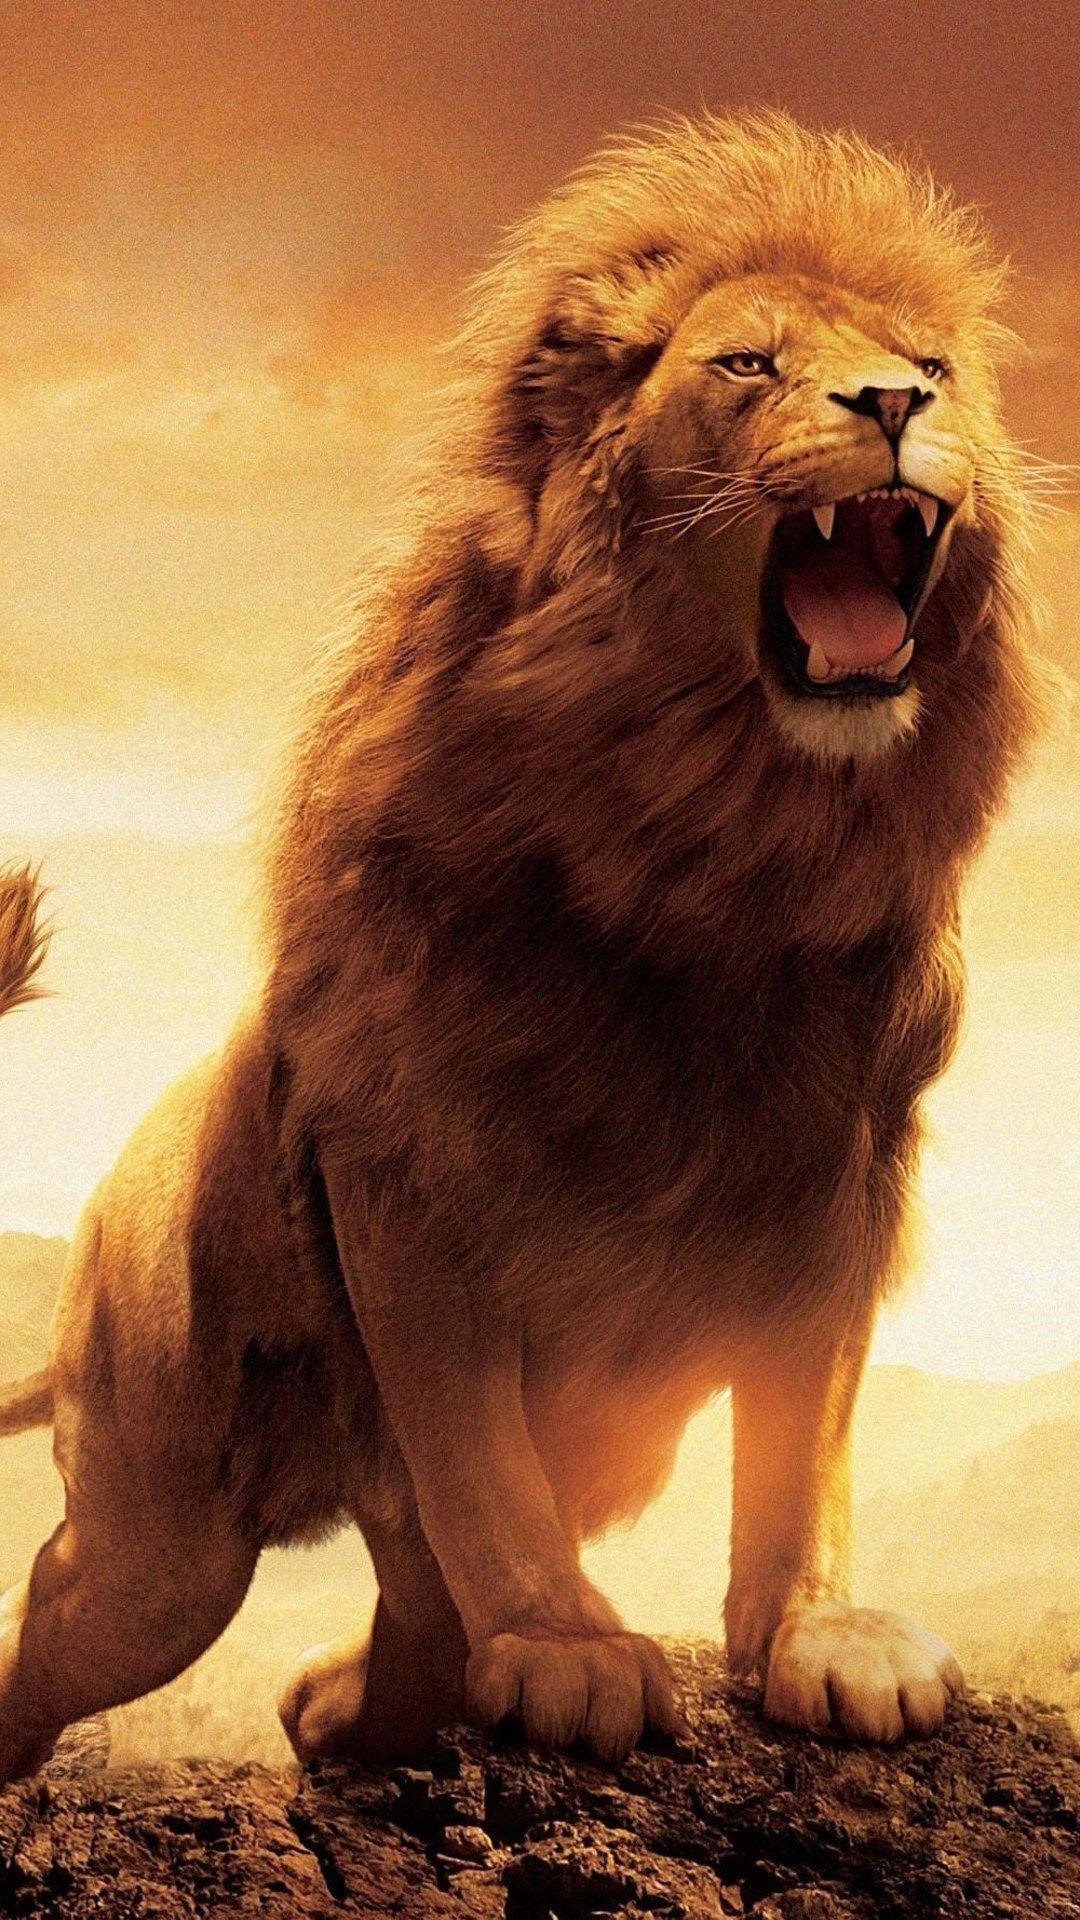 Roaring Wild Lion Iphone Wallpaper